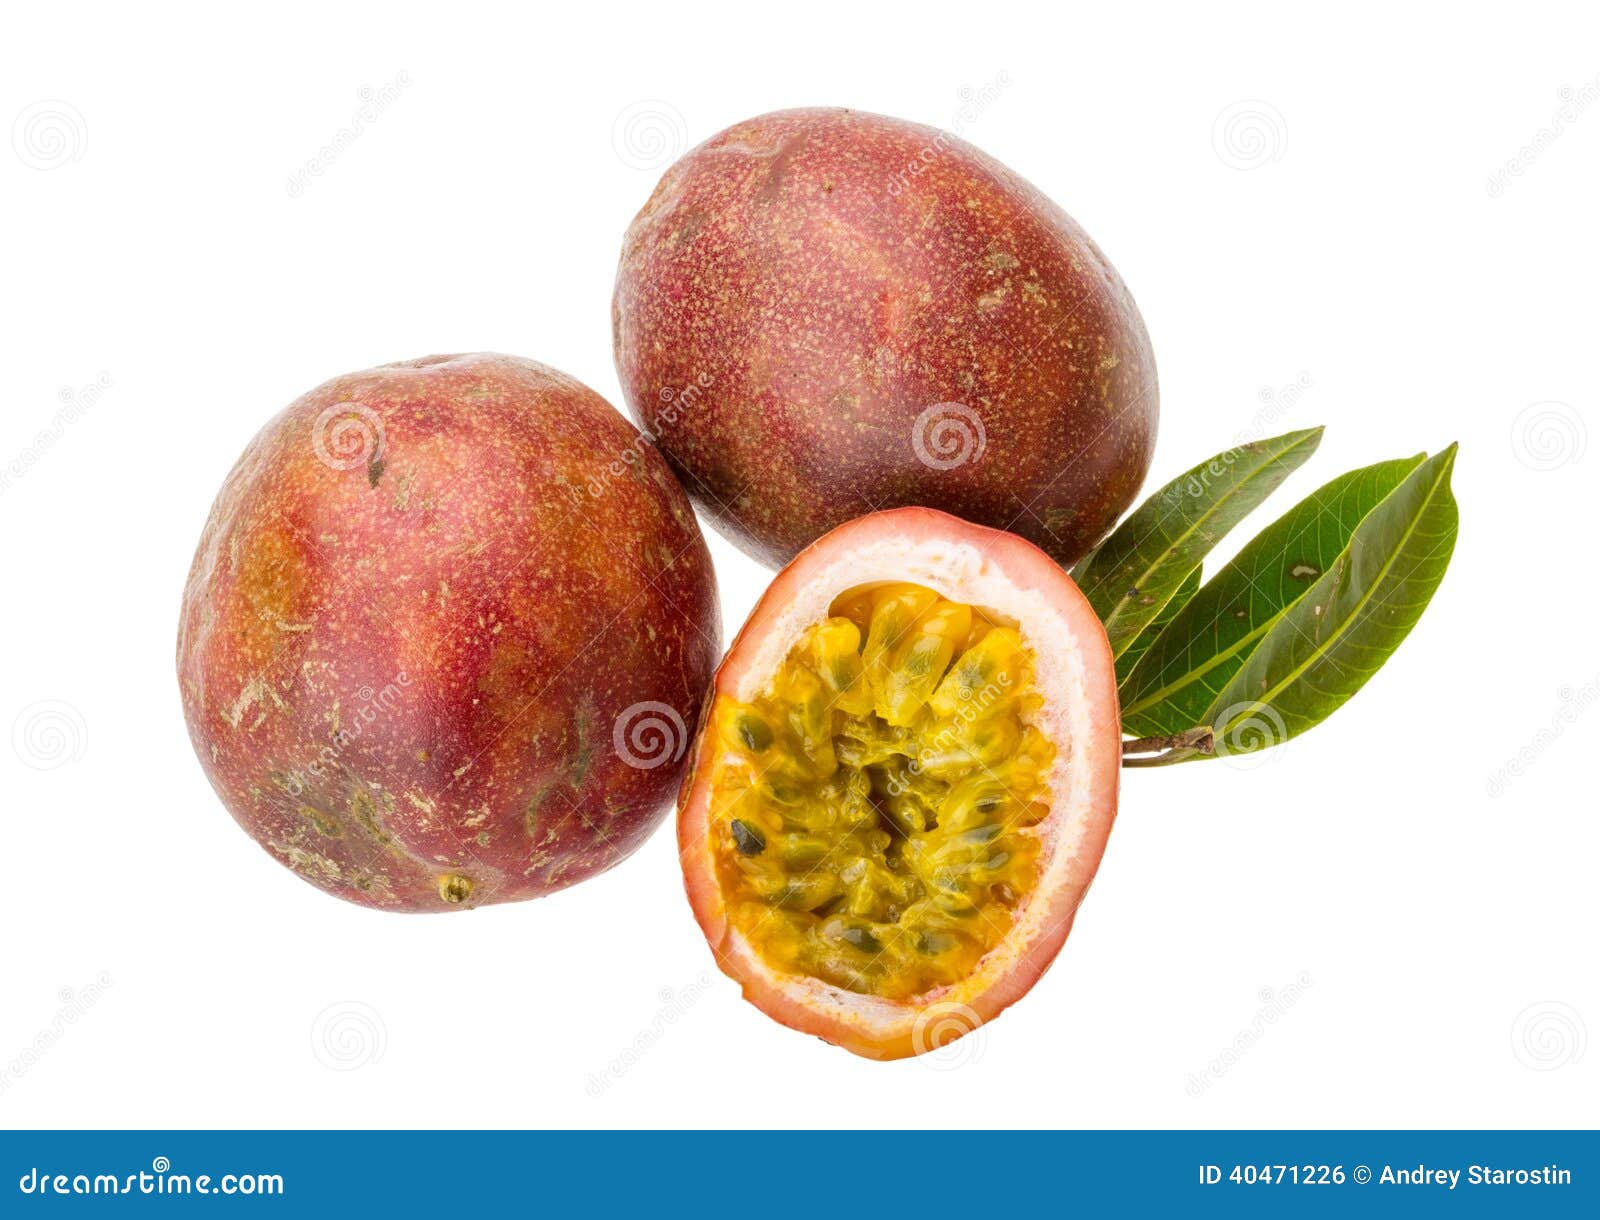 pasion fruit - maracuya